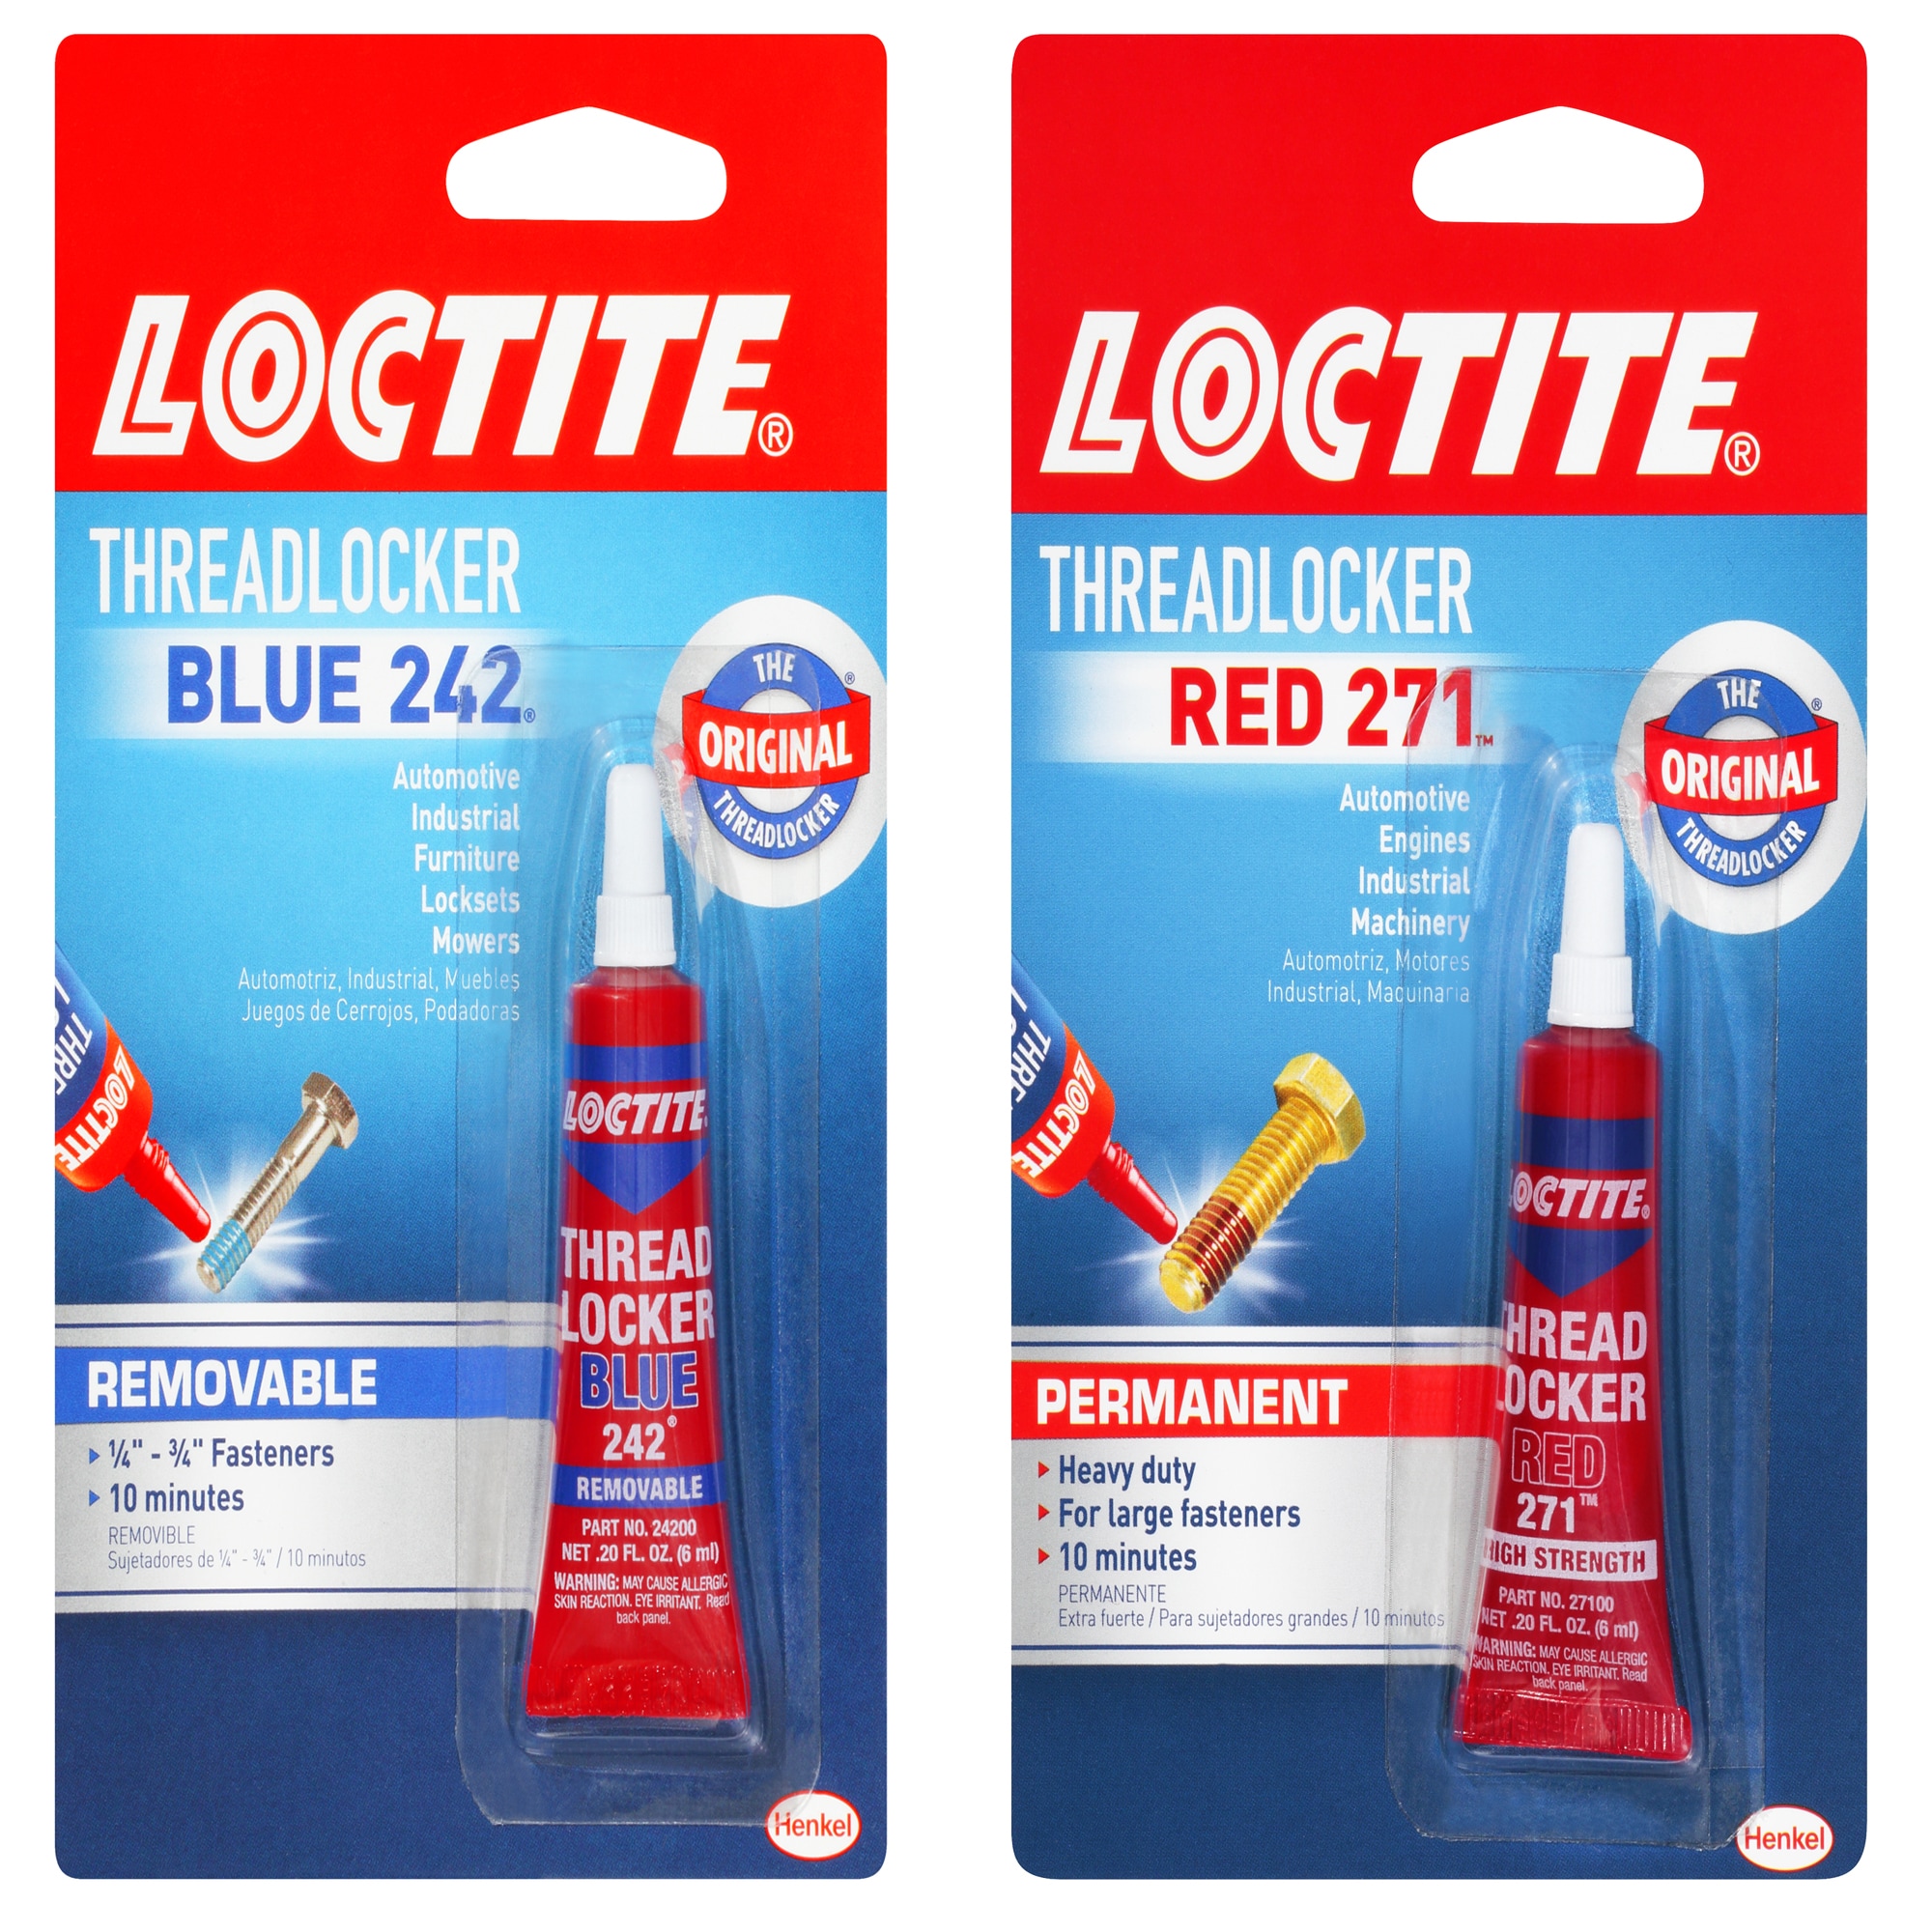 Loctite Threadlocker (Blue 242, 6mL)